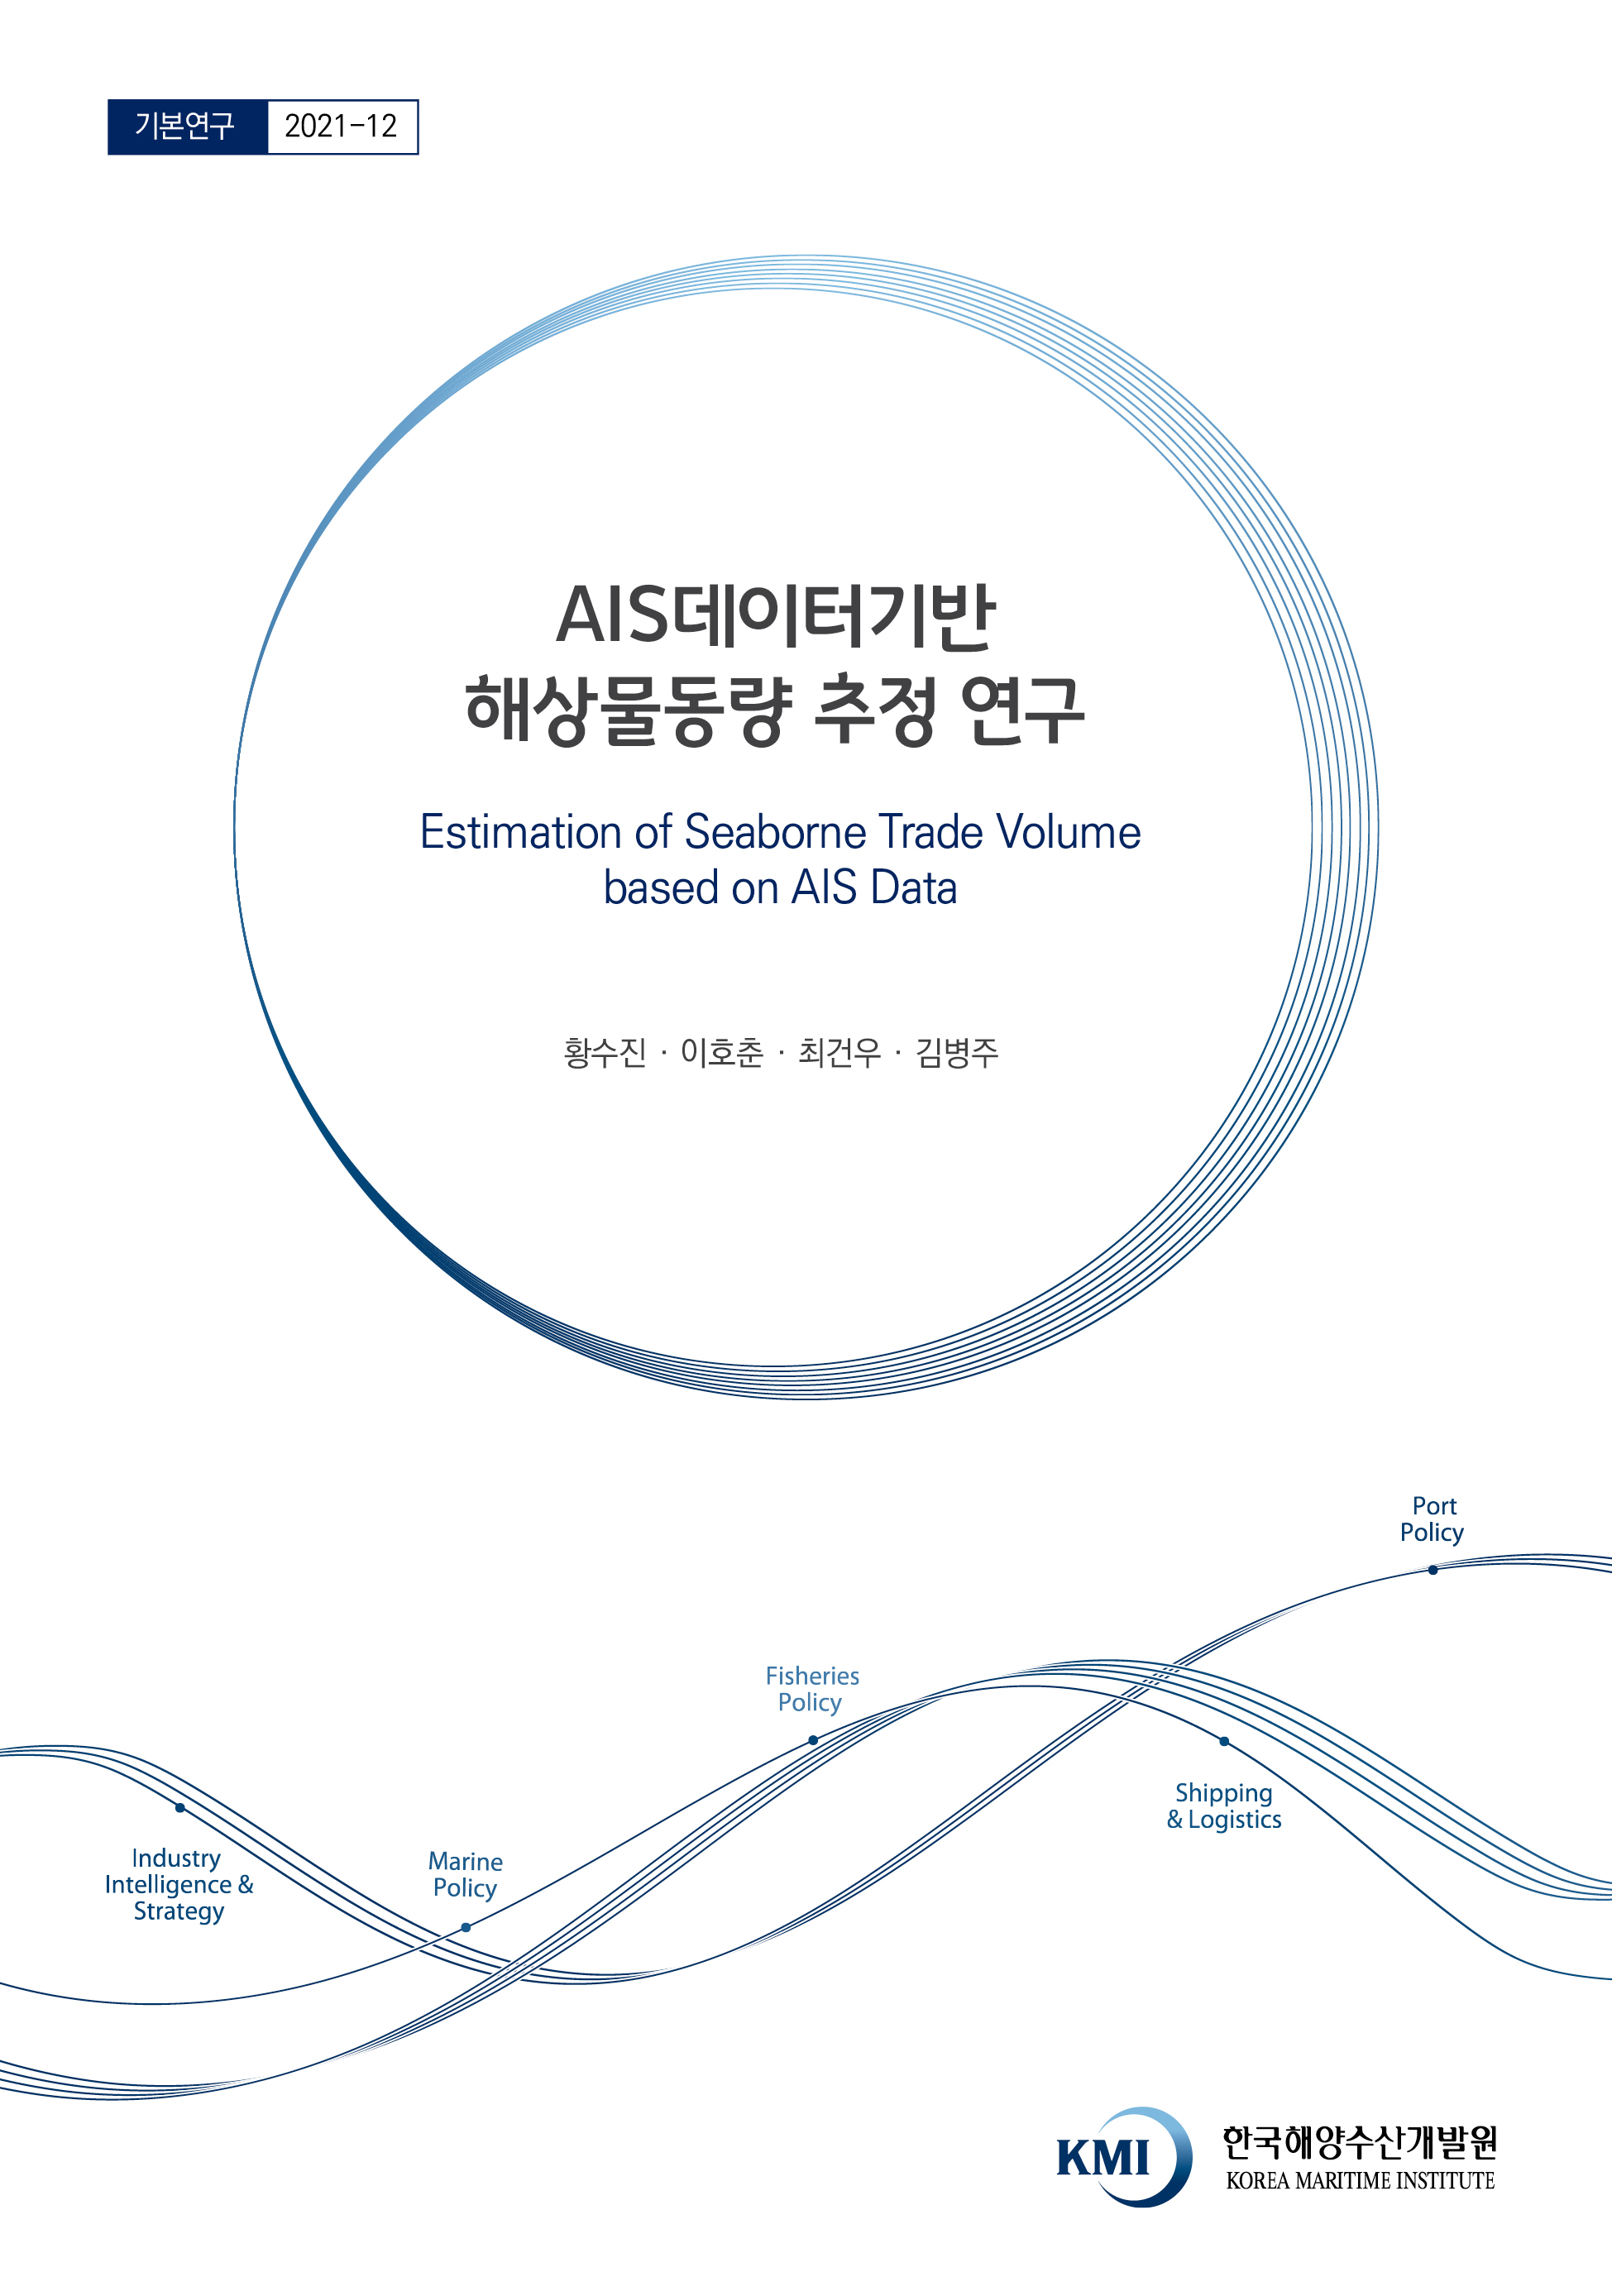 Estimation of Seaborne Trade Volume based on AIS Data